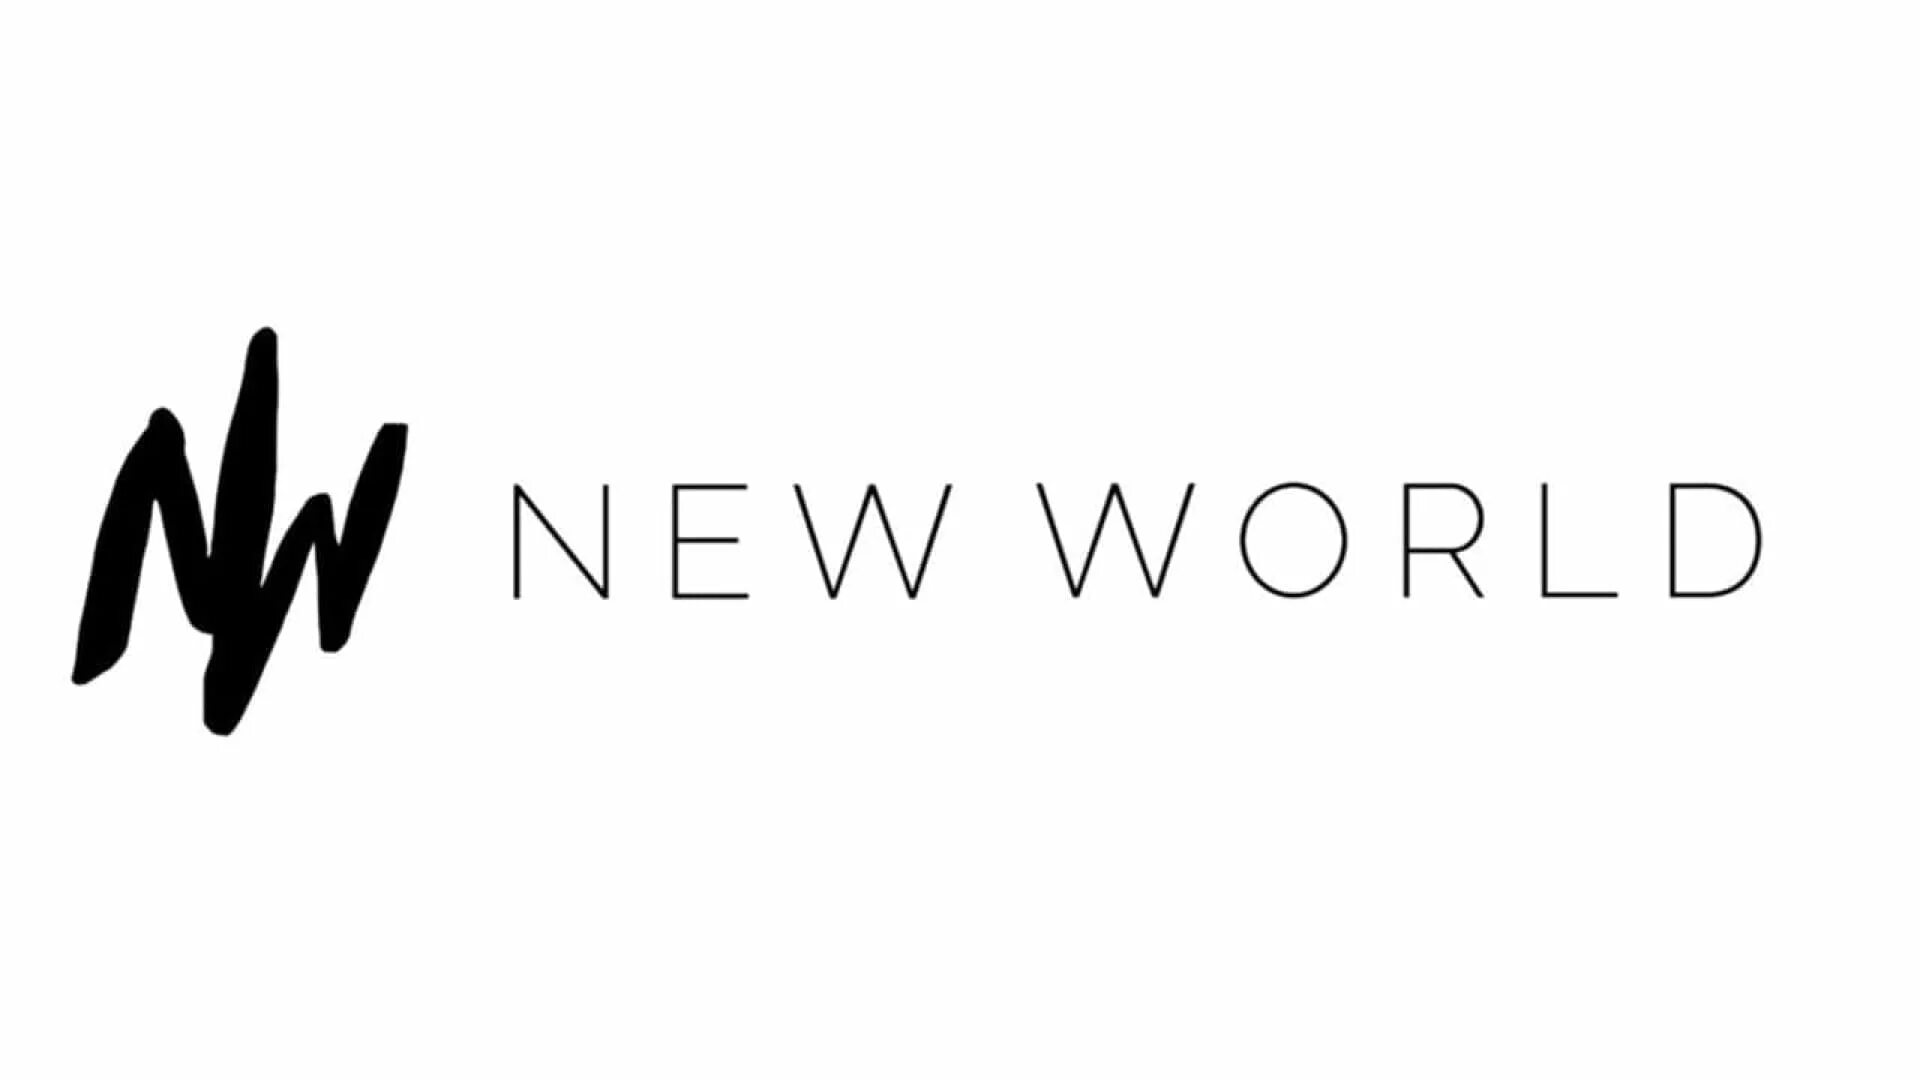 New interactive. New World лого. Логотип New World interactive. Wor(l)d лого. New World Адлин лого.